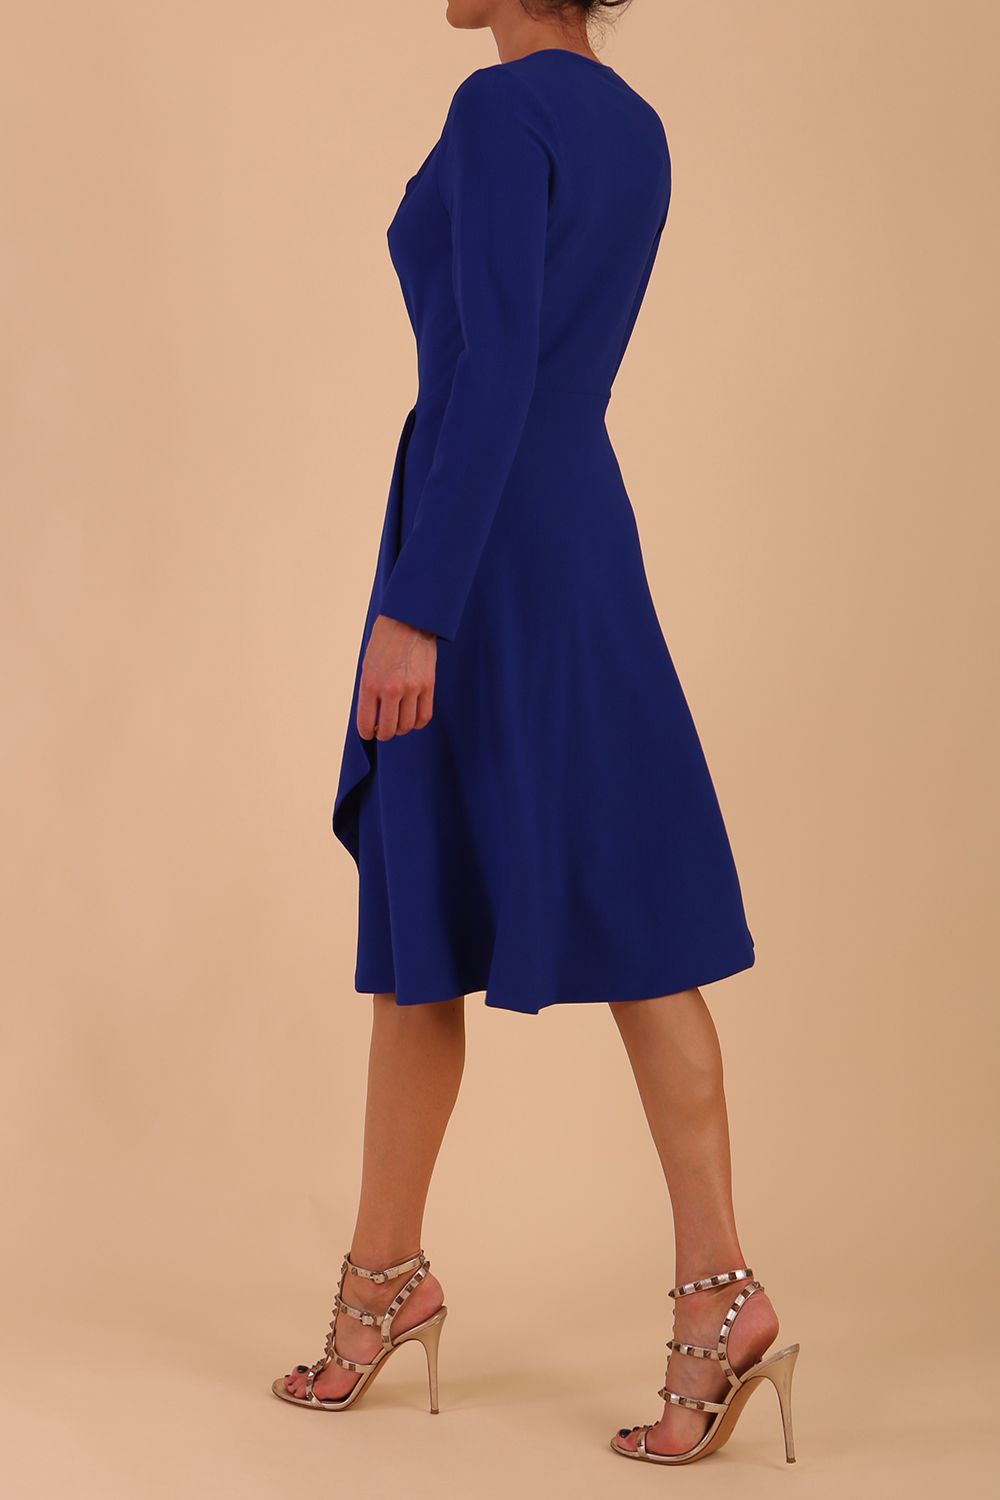 model is wearing diva catwalk moraig swing long sleeve dress with high cowl neckline and wrap skirt in cobalt blue back side